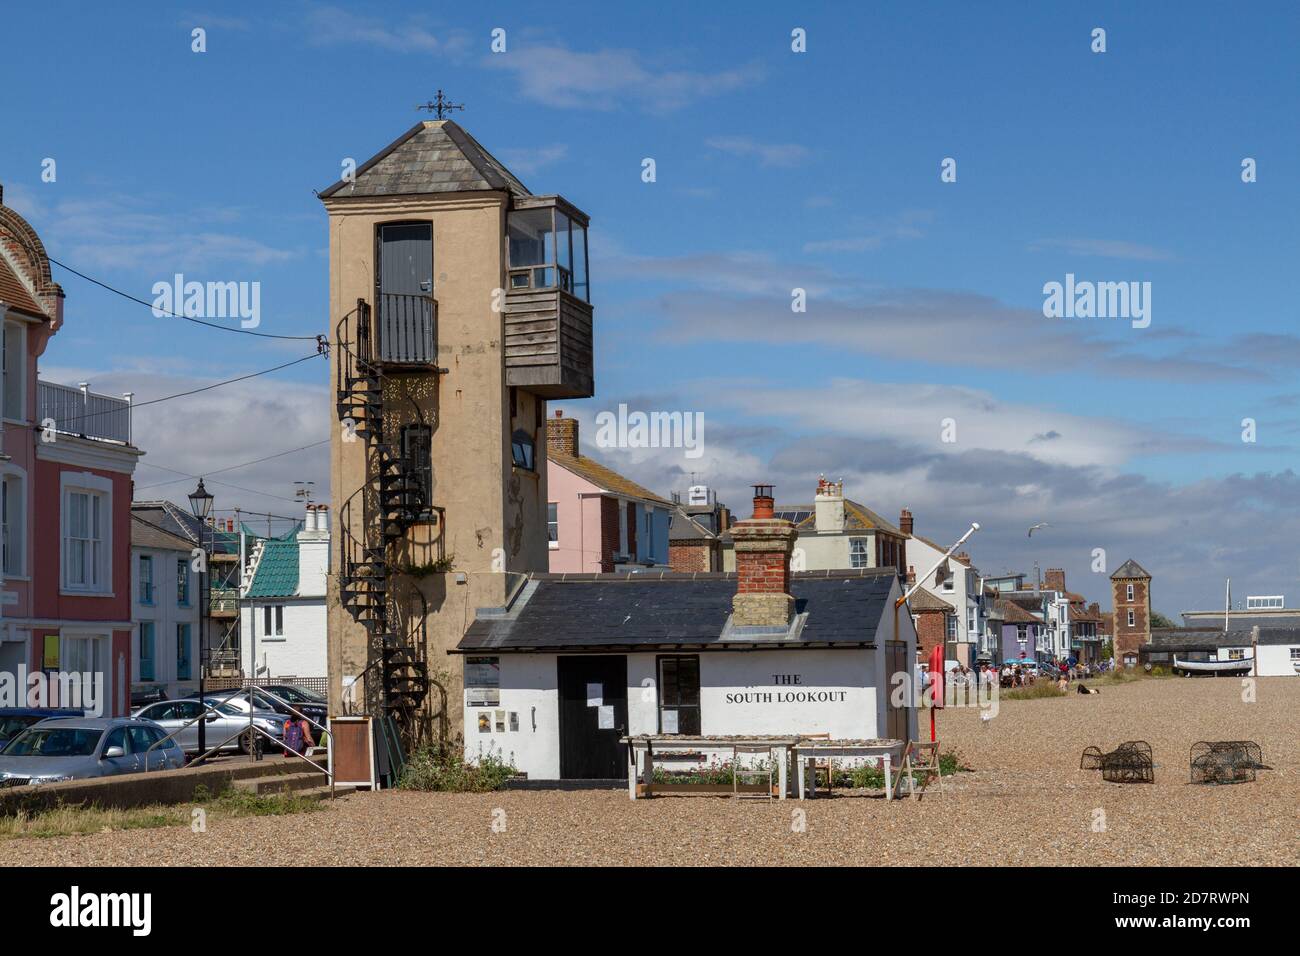 The South Lookout on Aldeburgh Beach, Aldeburgh, Woodbridge, Suffolk, UK. Stock Photo